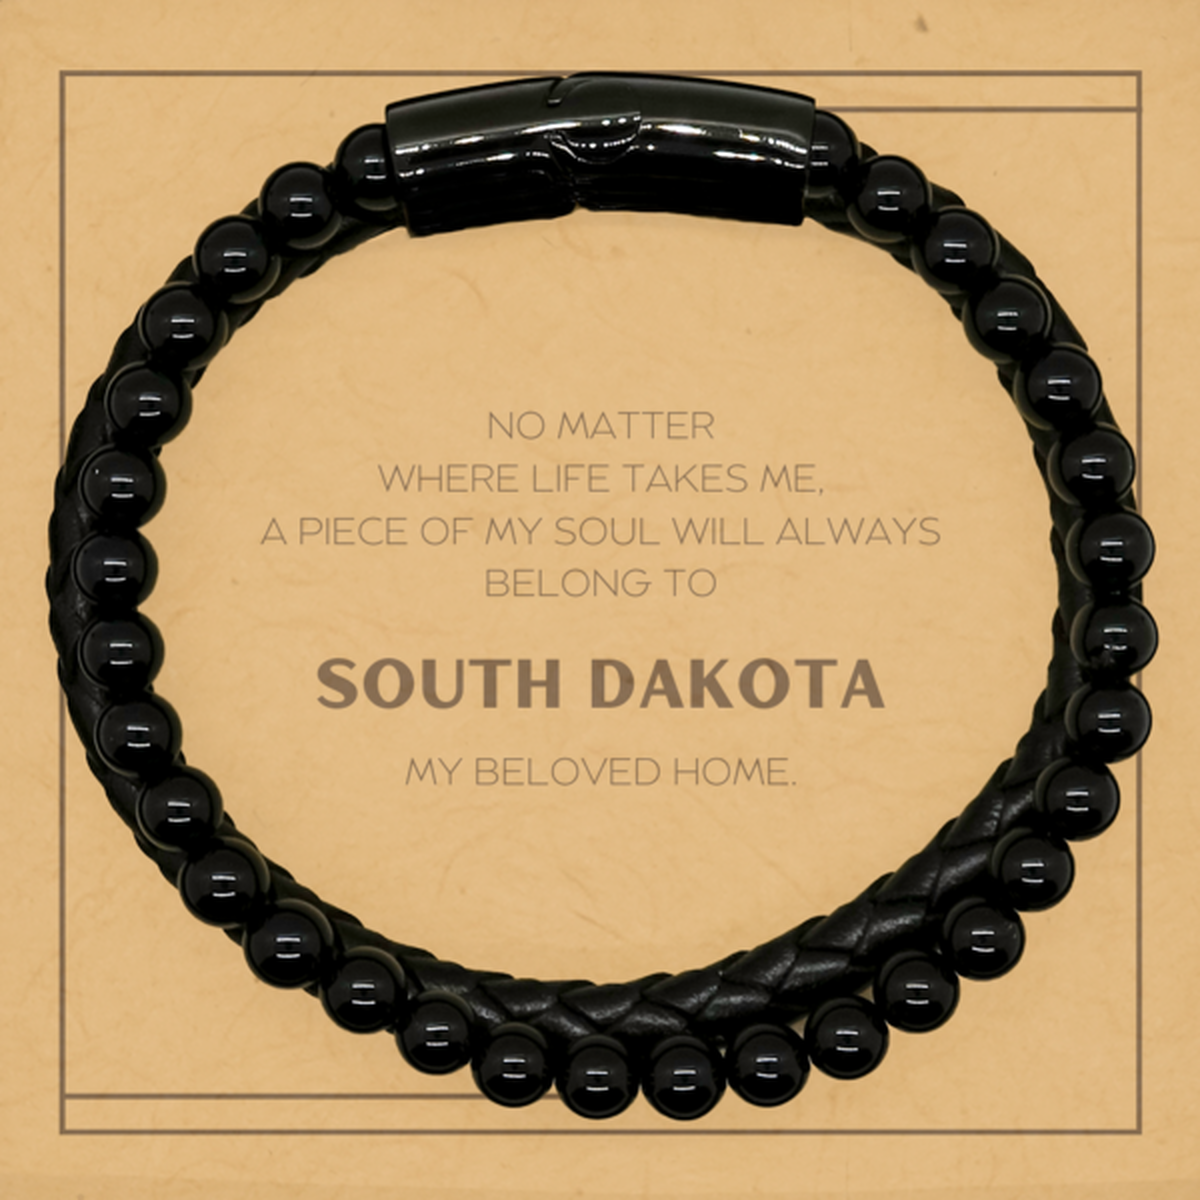 Love South Dakota State Gifts, My soul will always belong to South Dakota, Proud Stone Leather Bracelets, Birthday Unique Gifts For South Dakota Men, Women, Friends